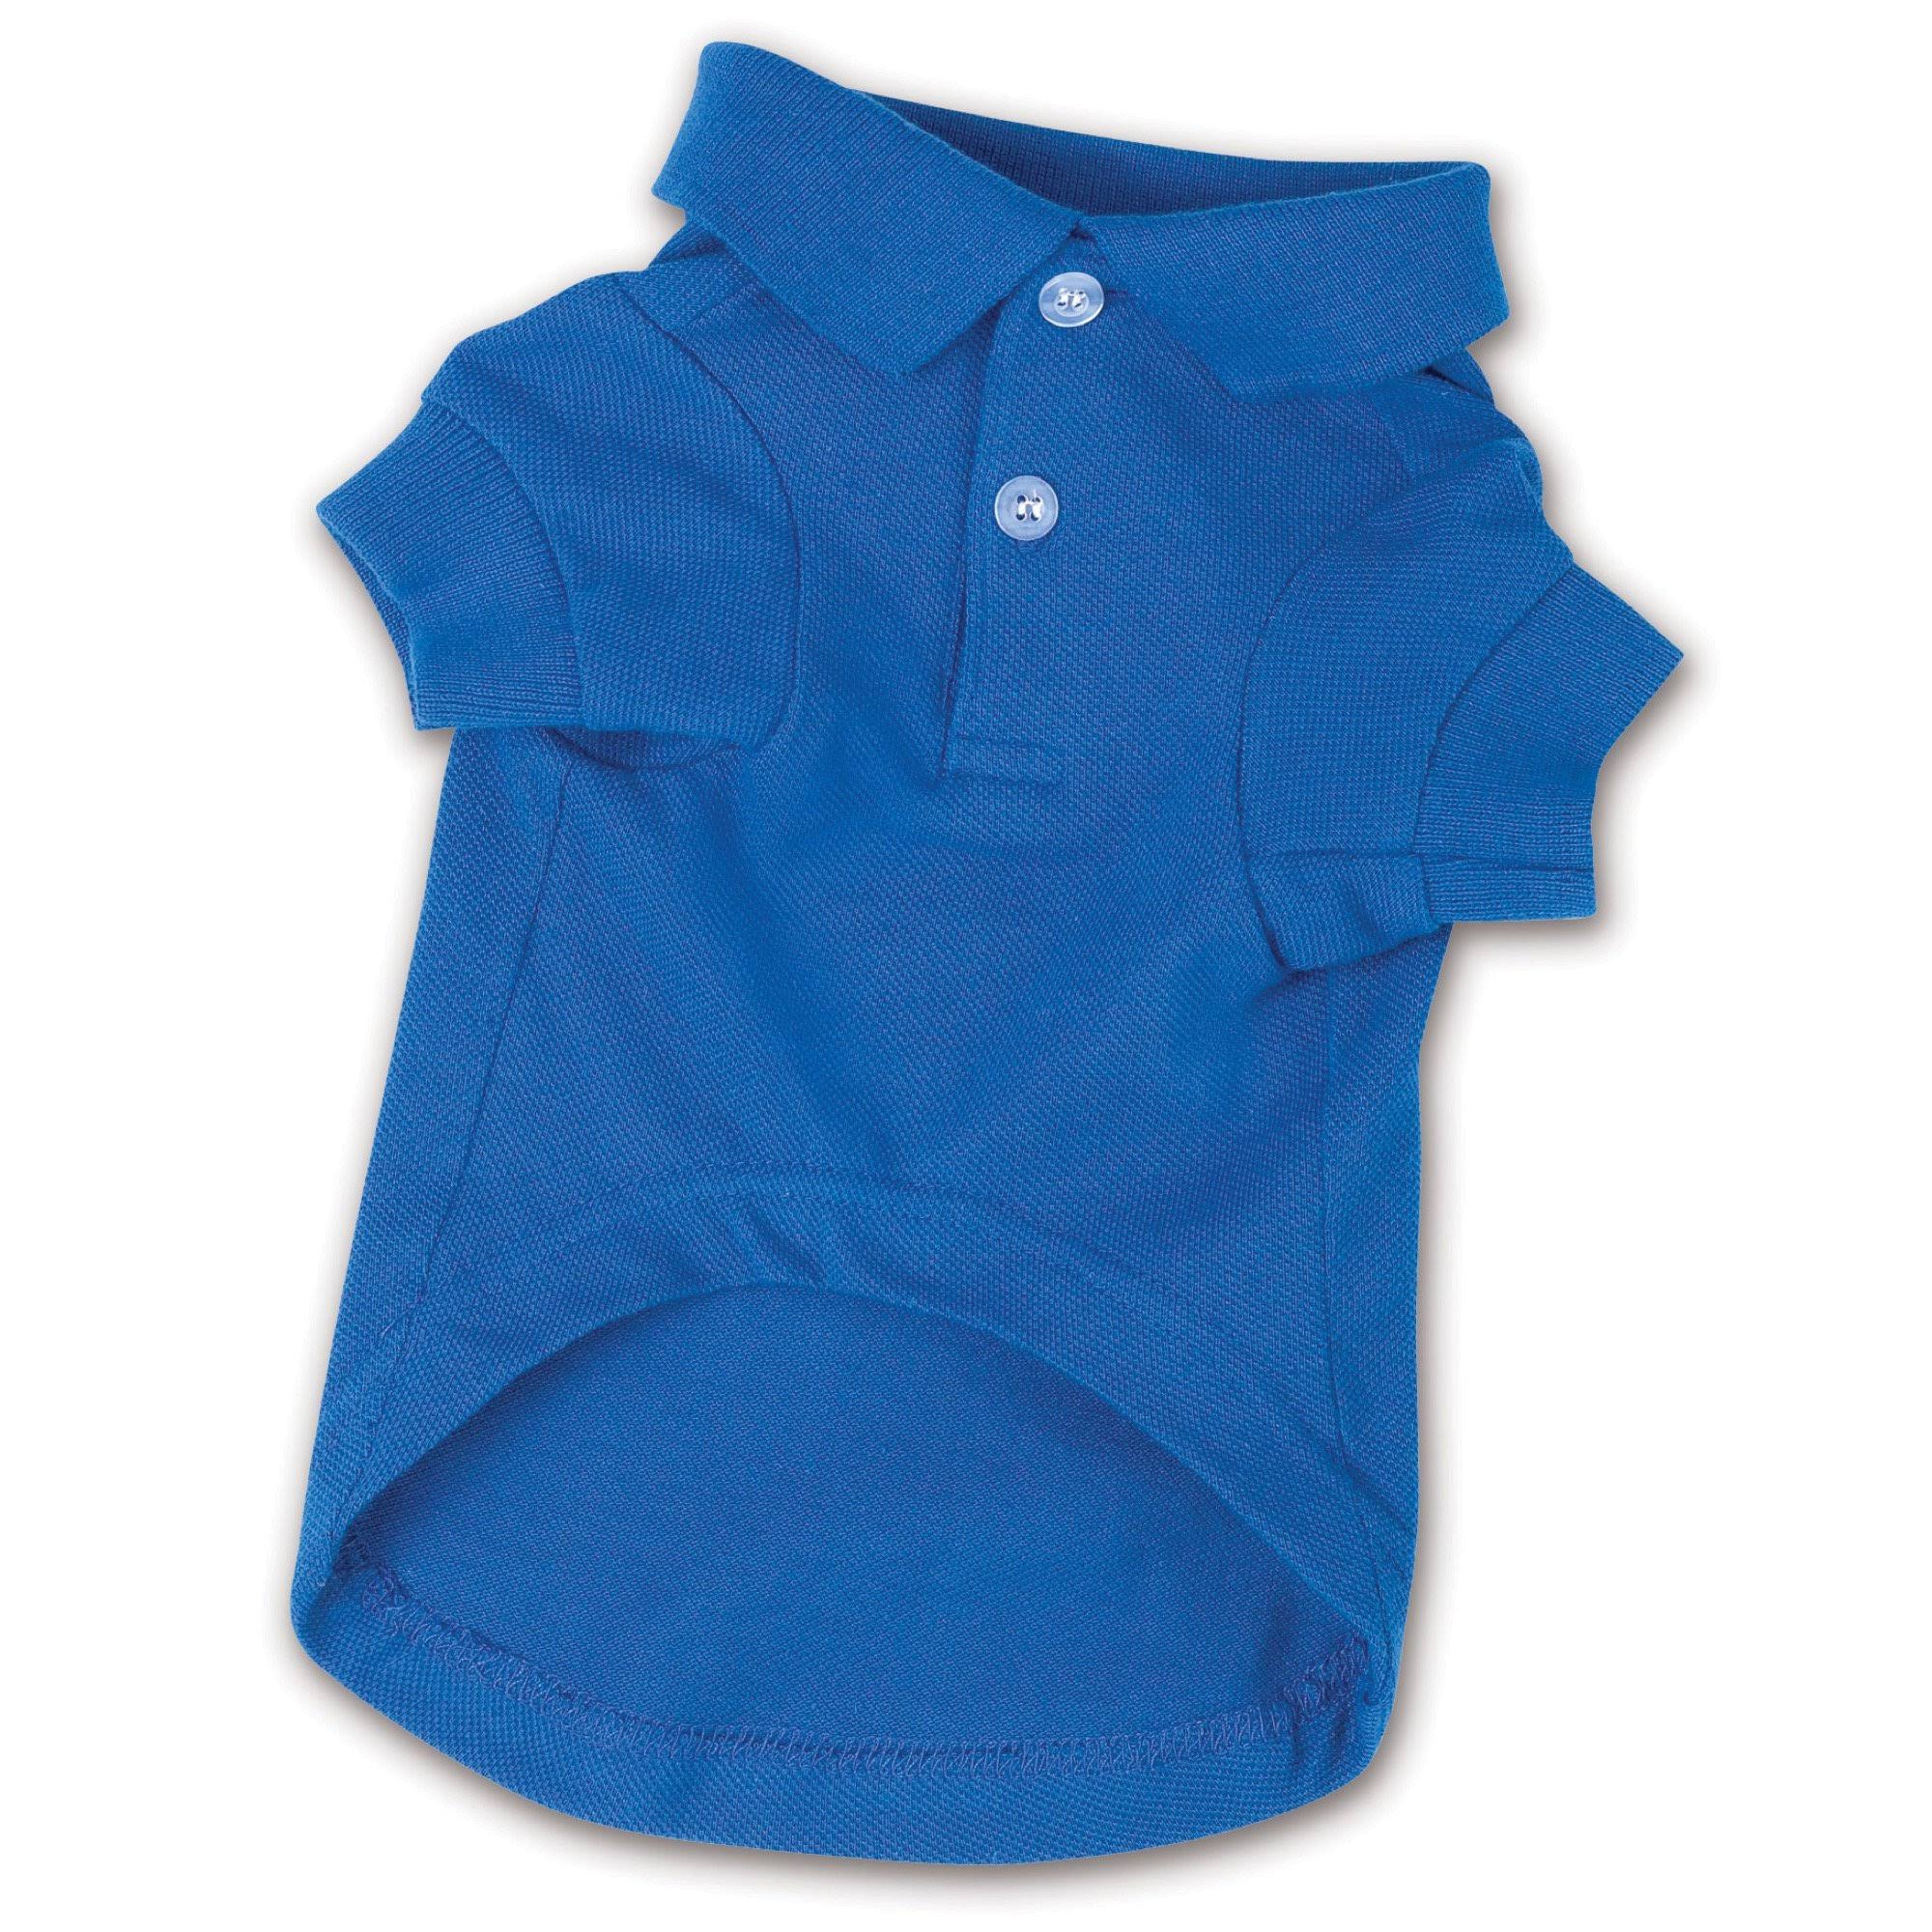 Zack & Zoey Polo Shirt - Medium - Blue